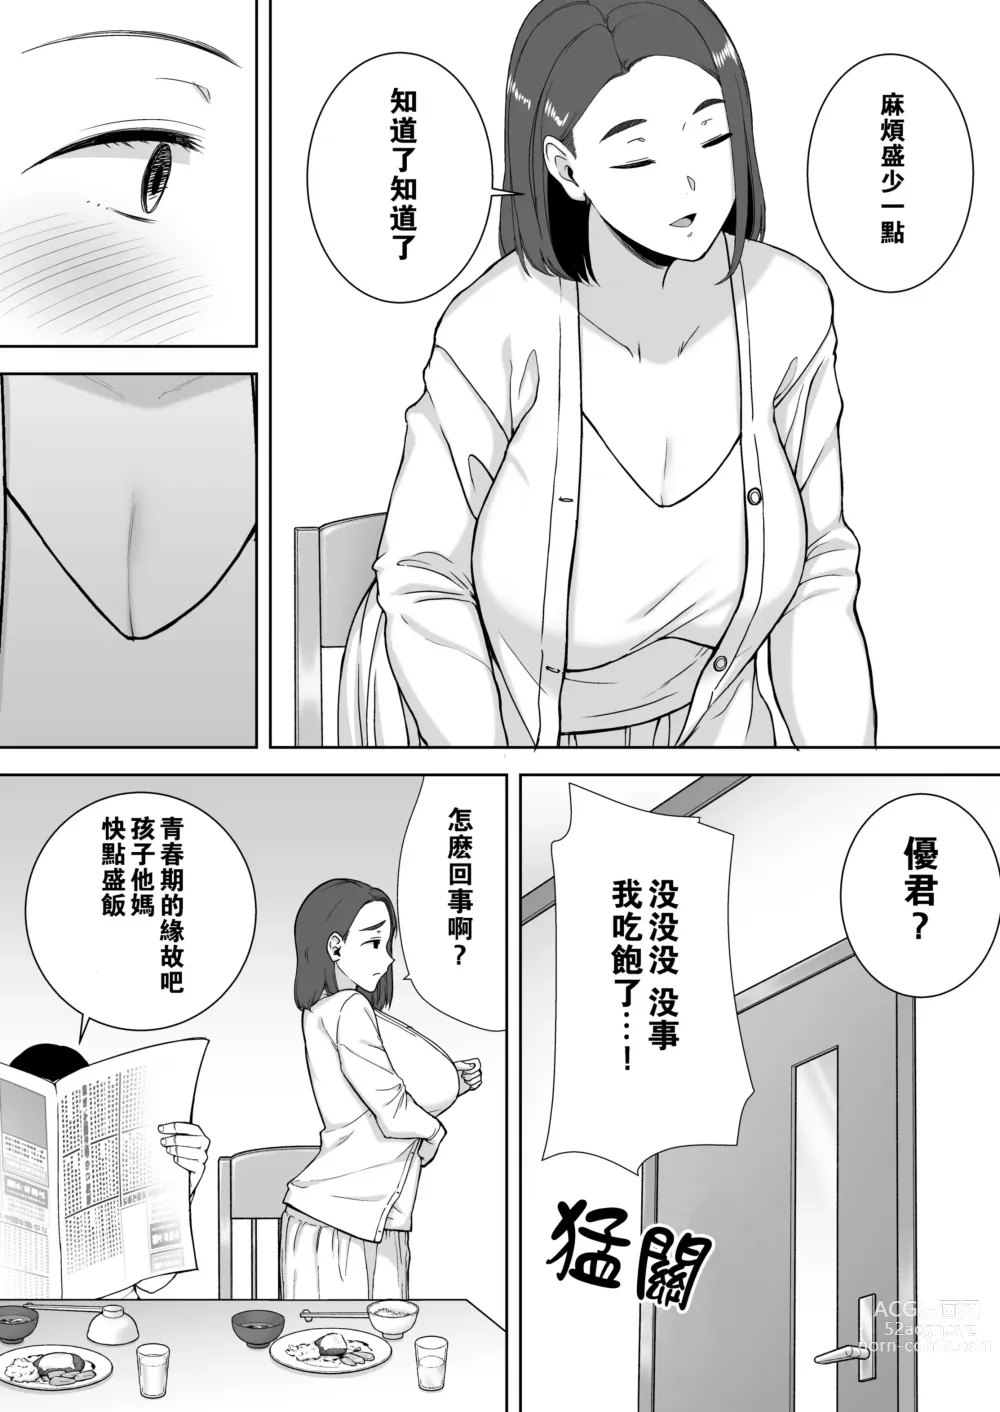 Page 4 of doujinshi 僕の母さんで、僕の好きな人。1-5